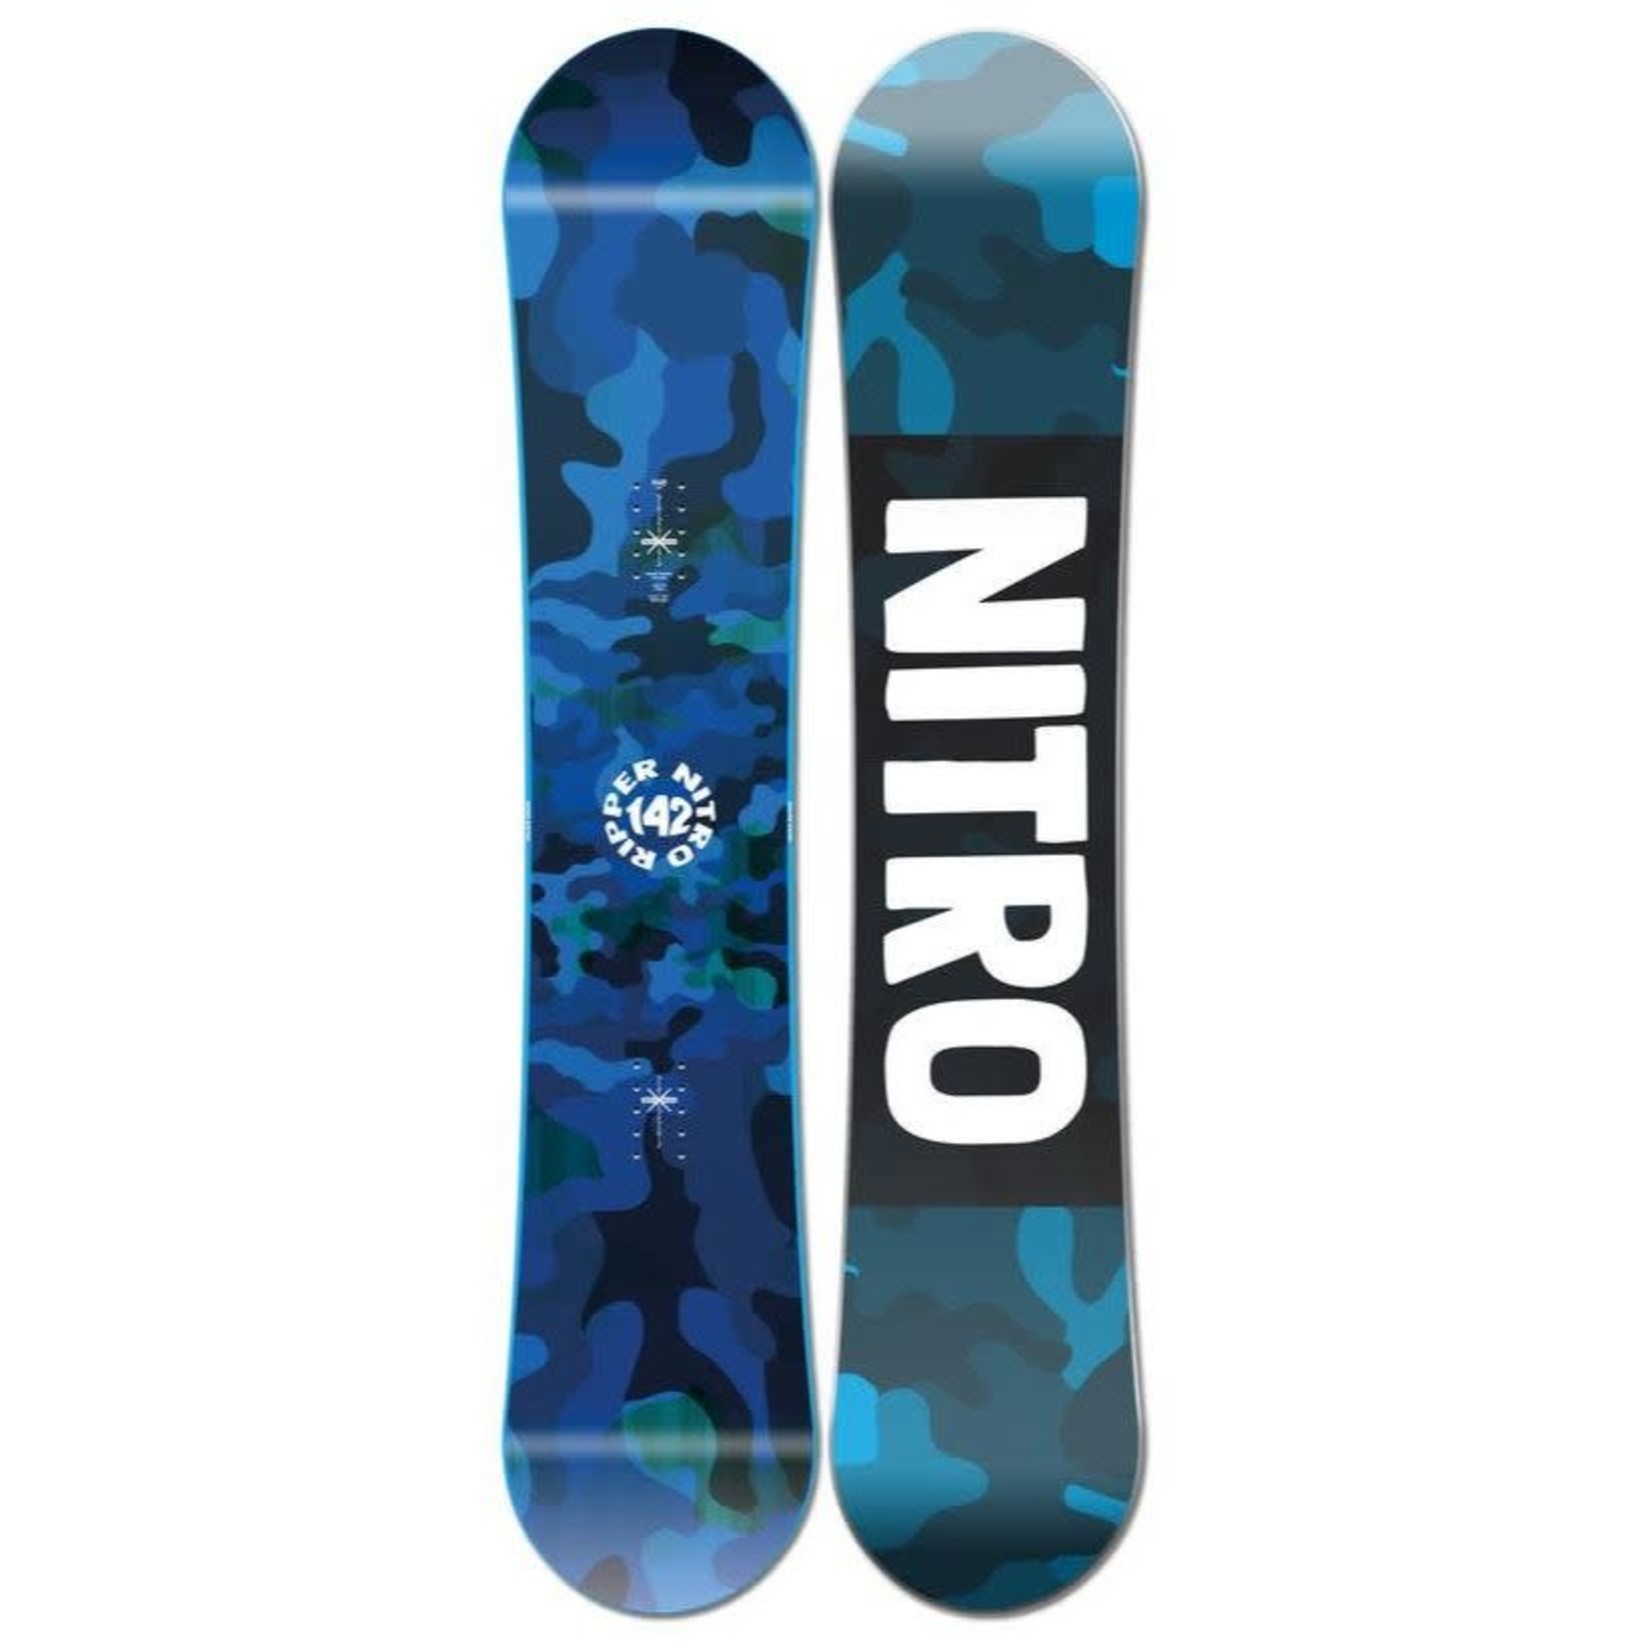 leerboek Destructief Omgaan 2021 Nitro Ripper Youth Deck - - Attic Skate & Snow Shop